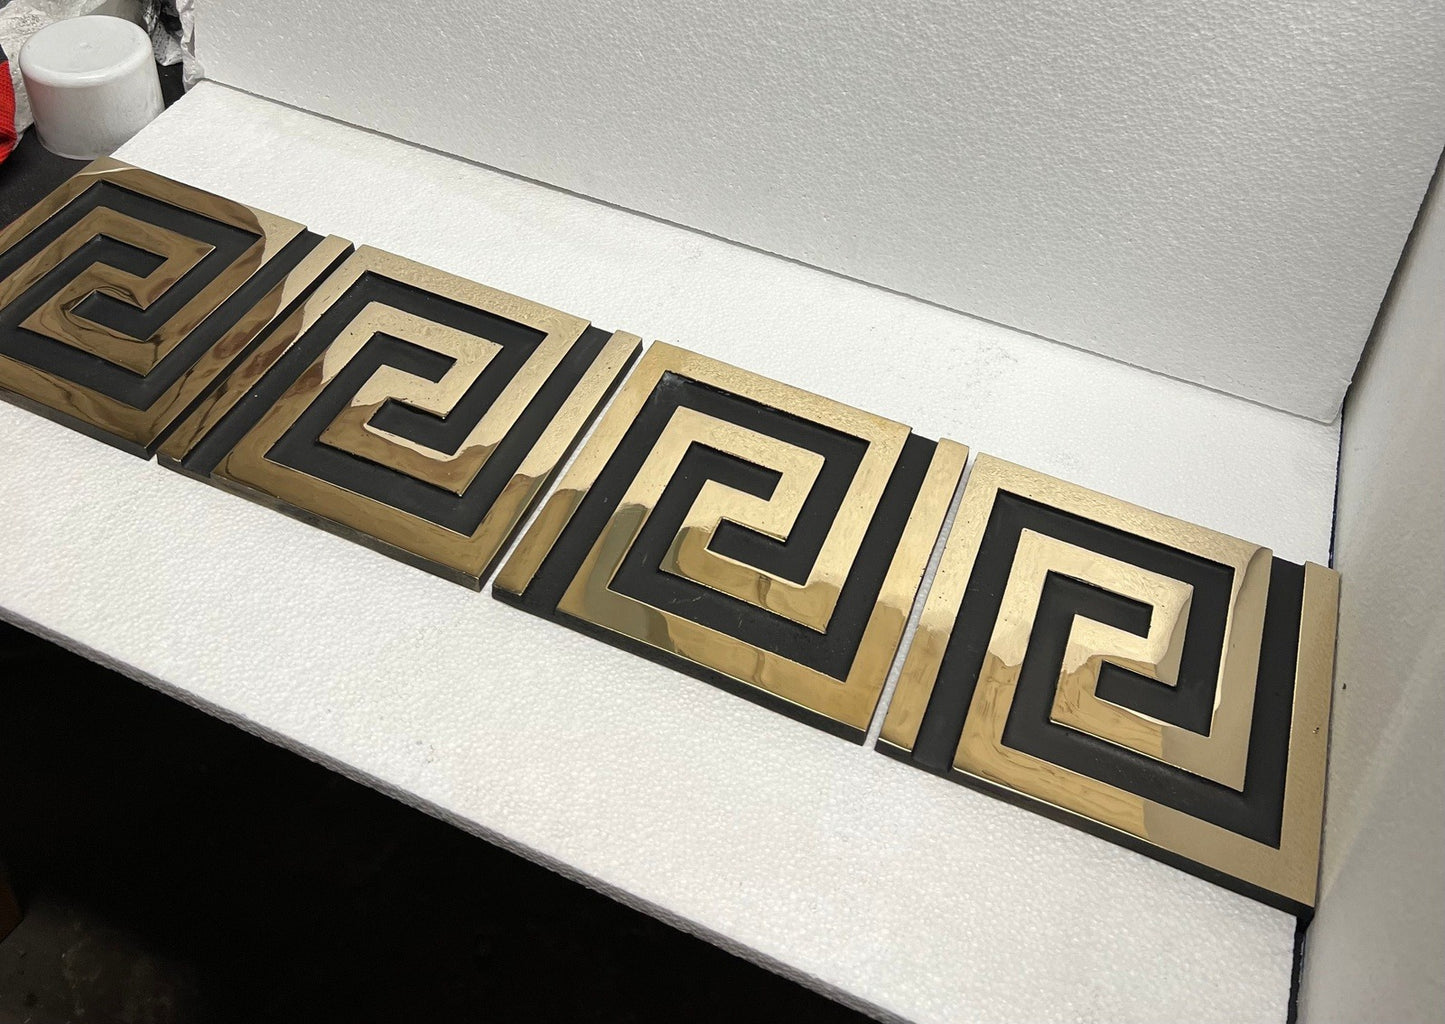 Greek Key Tiles